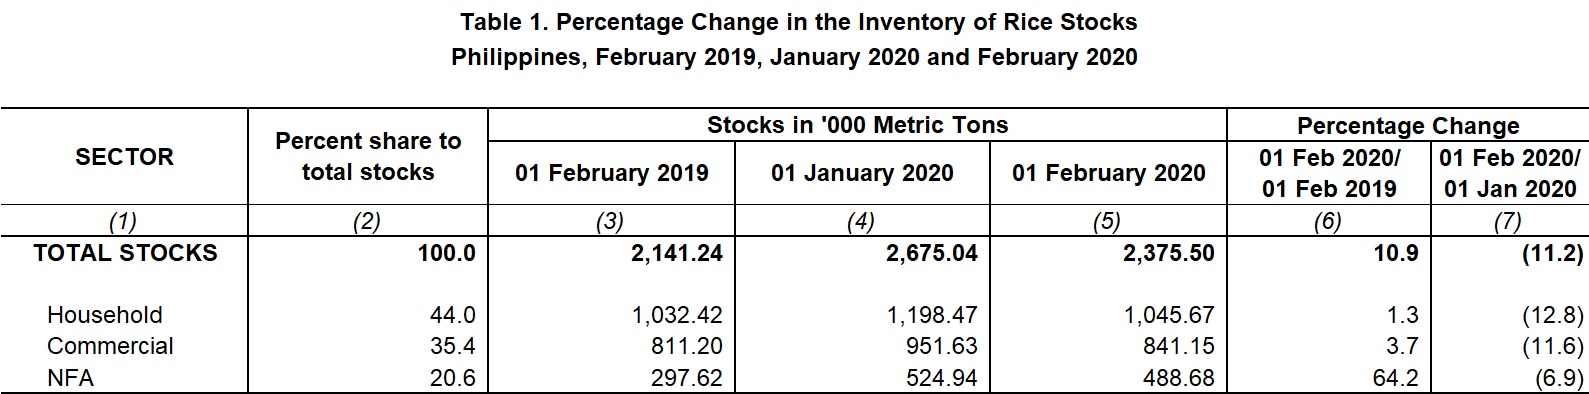 Table 1 Percentage Change Inventory of Rice Stocks February 2019,  Janaury 2020 and February 2020